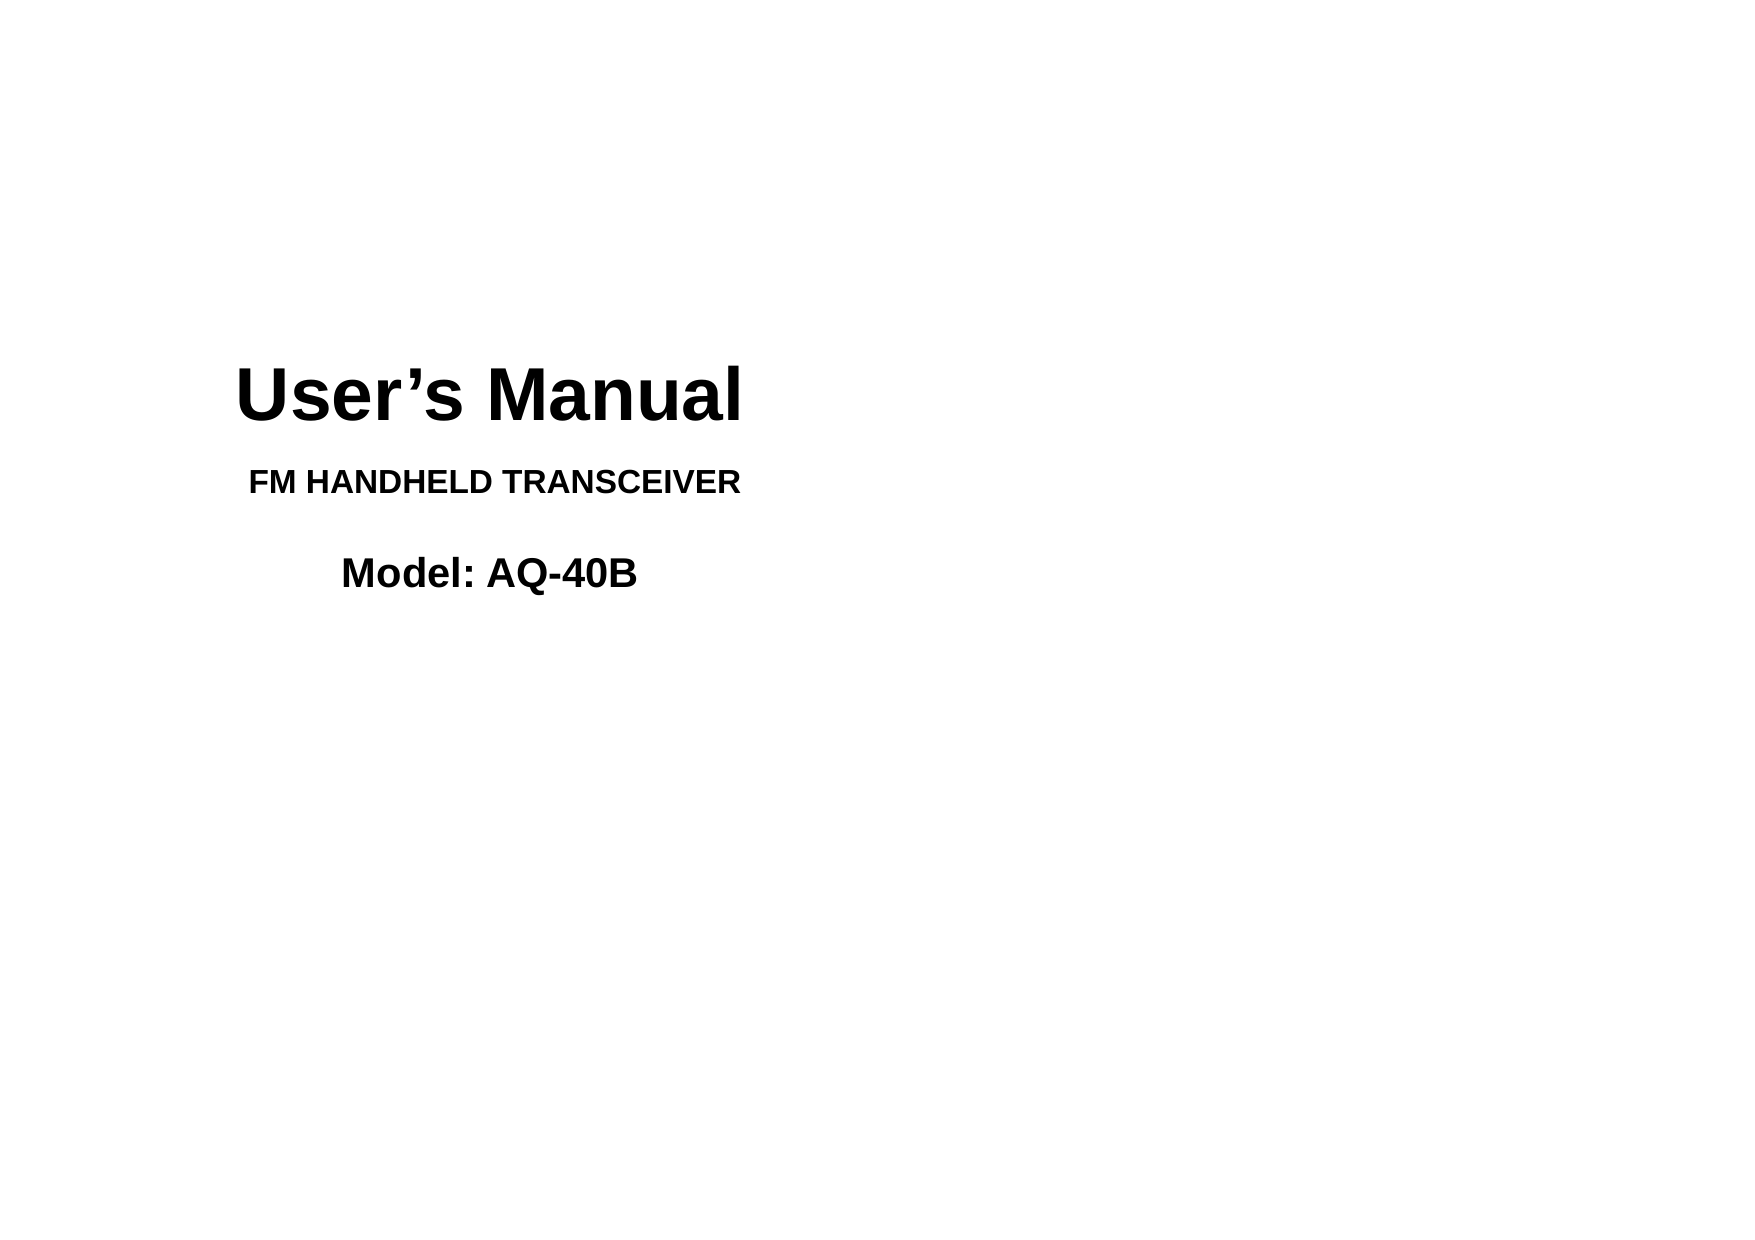   User’s Manual   FM HANDHELD TRANSCEIVER           Model: AQ-40B      